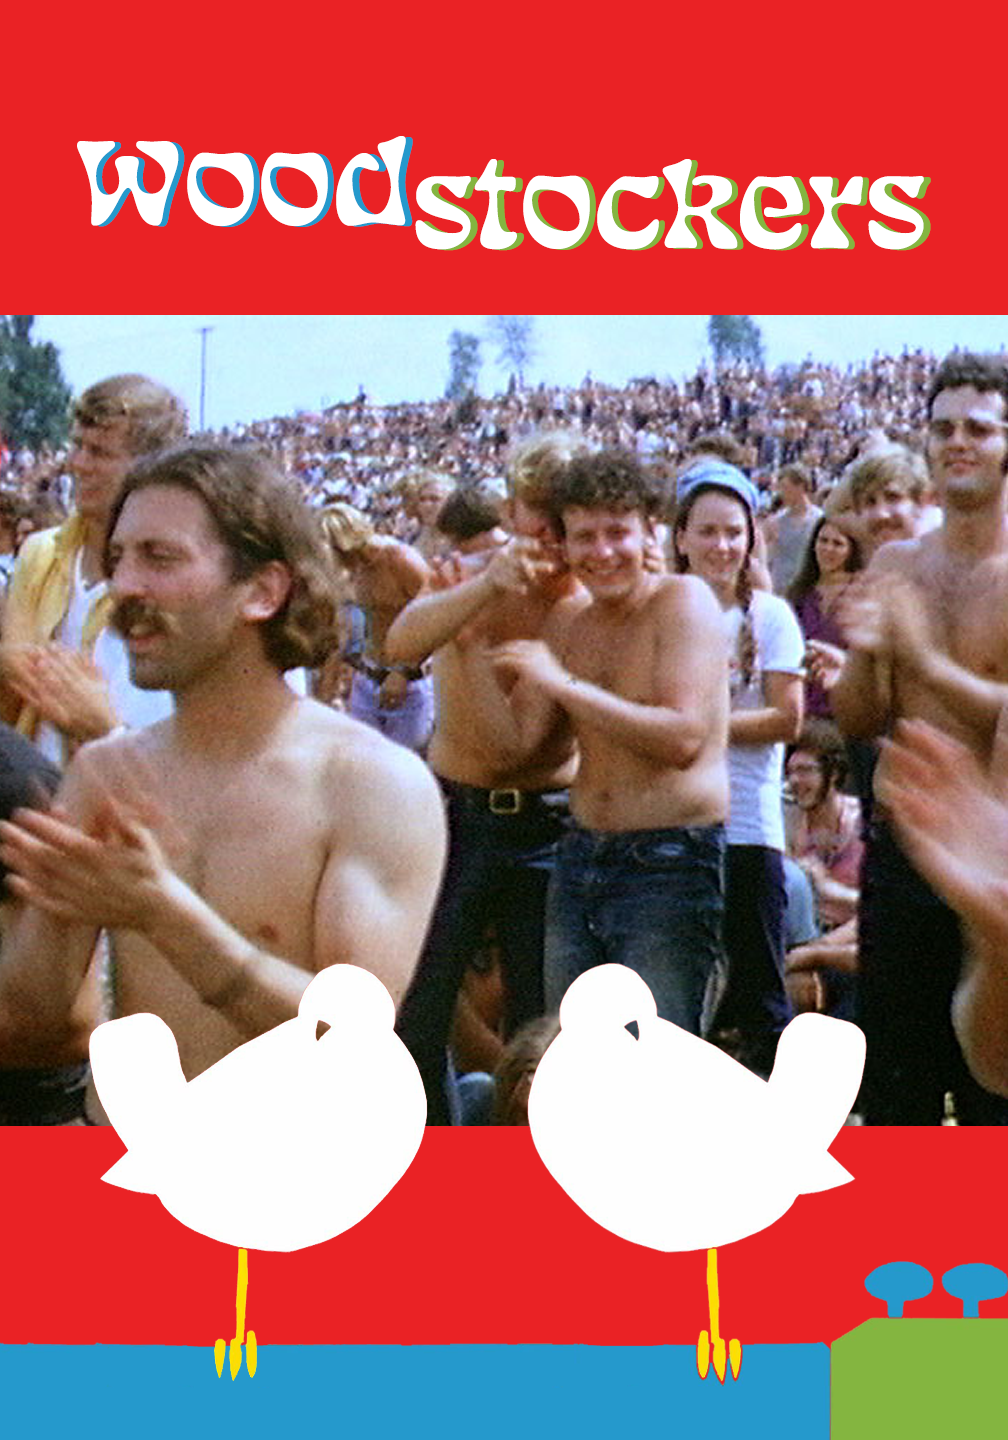 Woodstockers